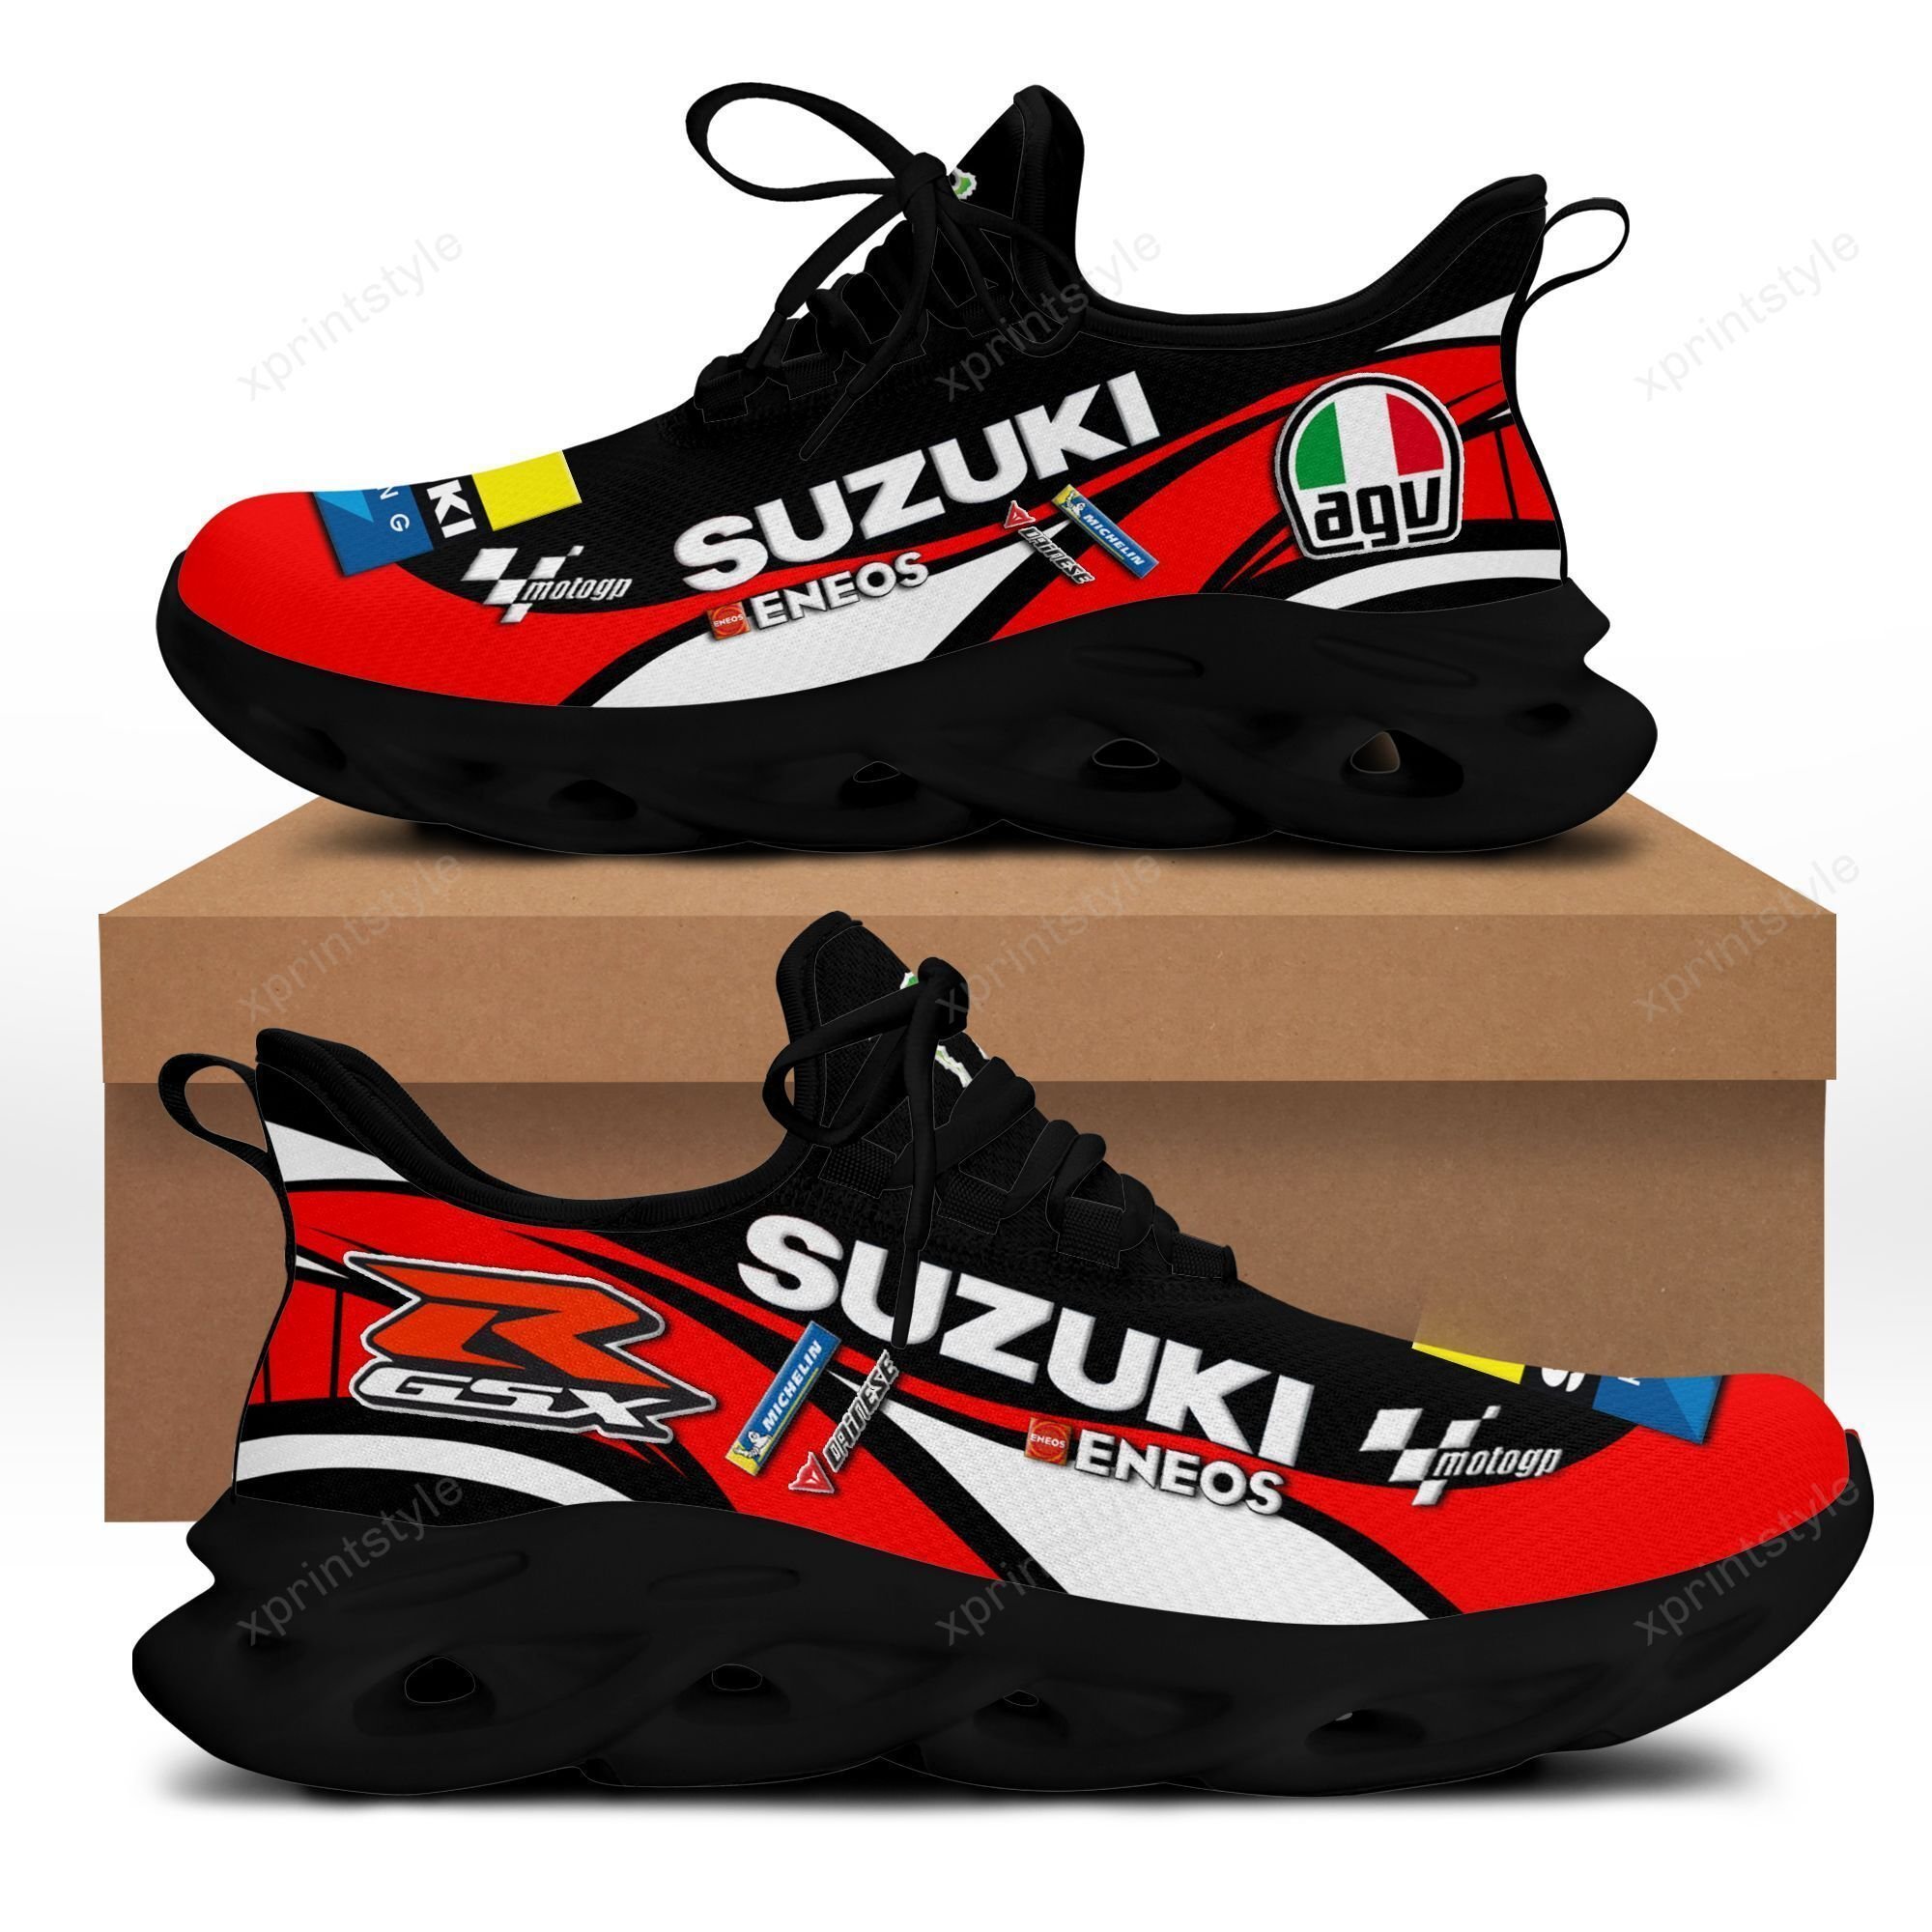 SUZUKI RACING RUNNING SHOES VER 1 – Fashionspicex Shop